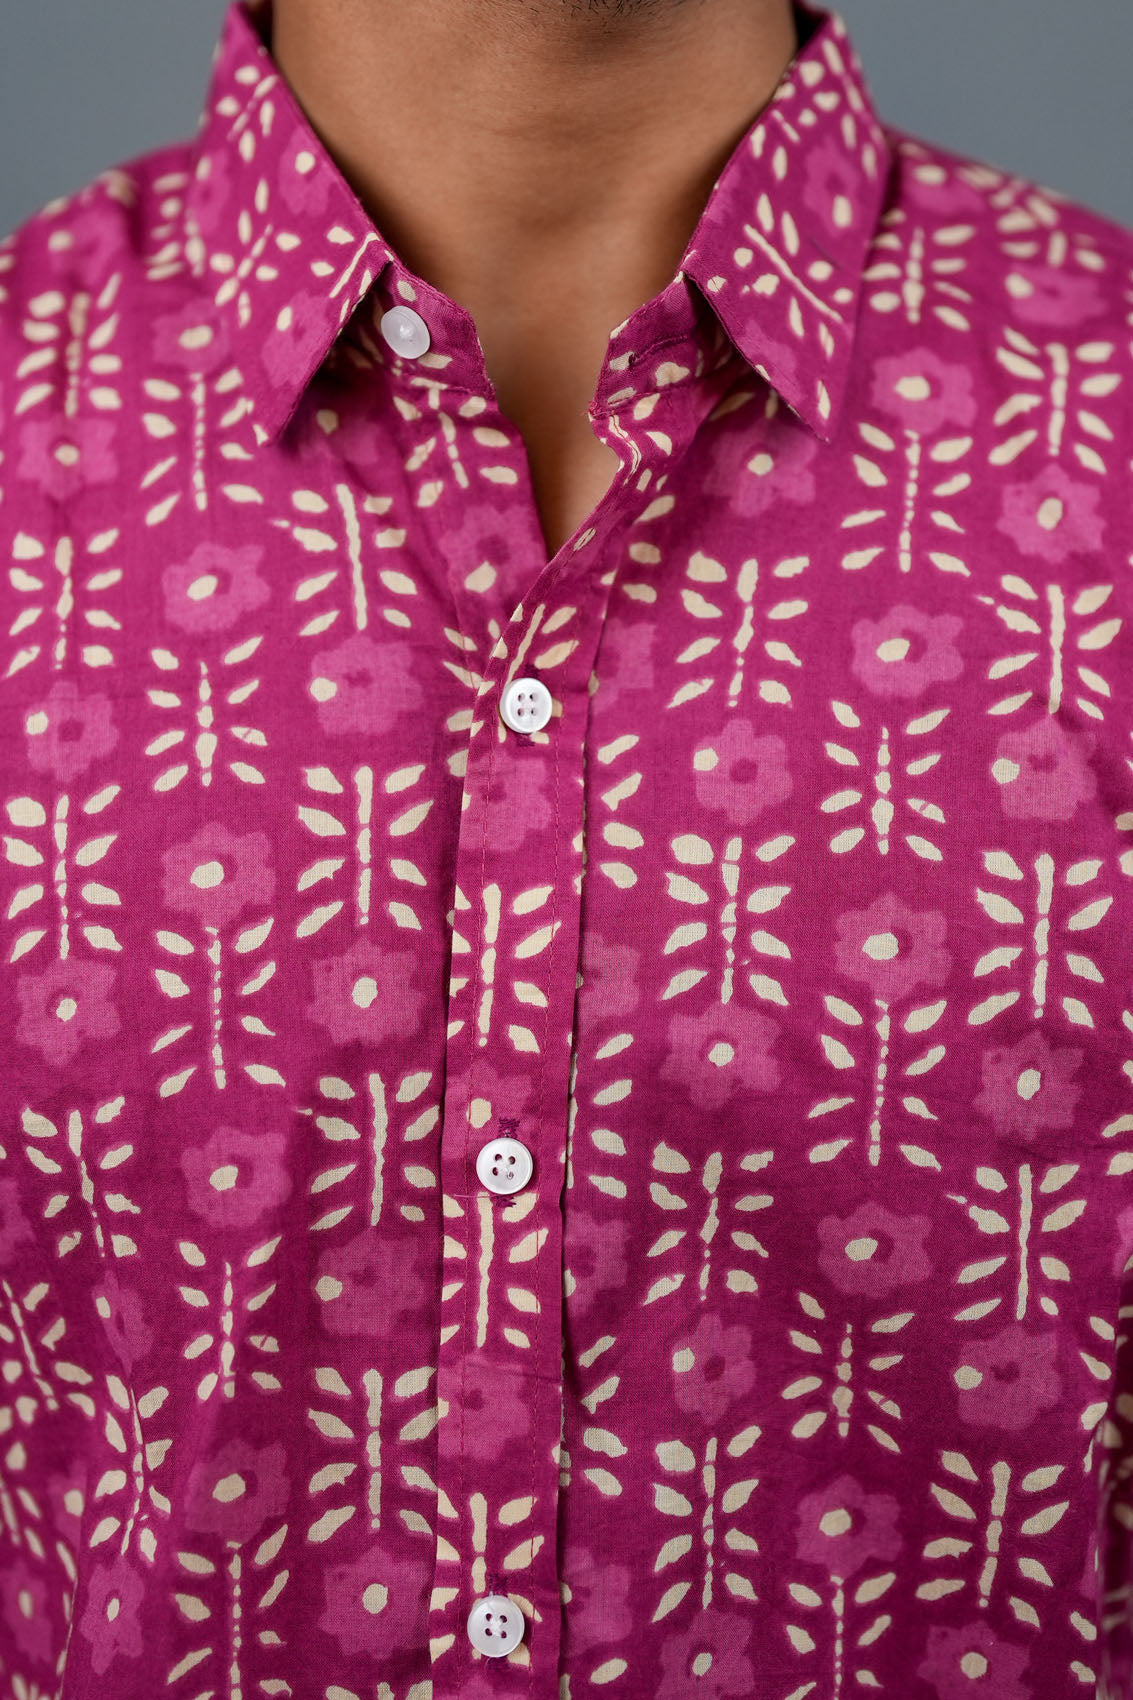 Hot Pink Cotton Shirt